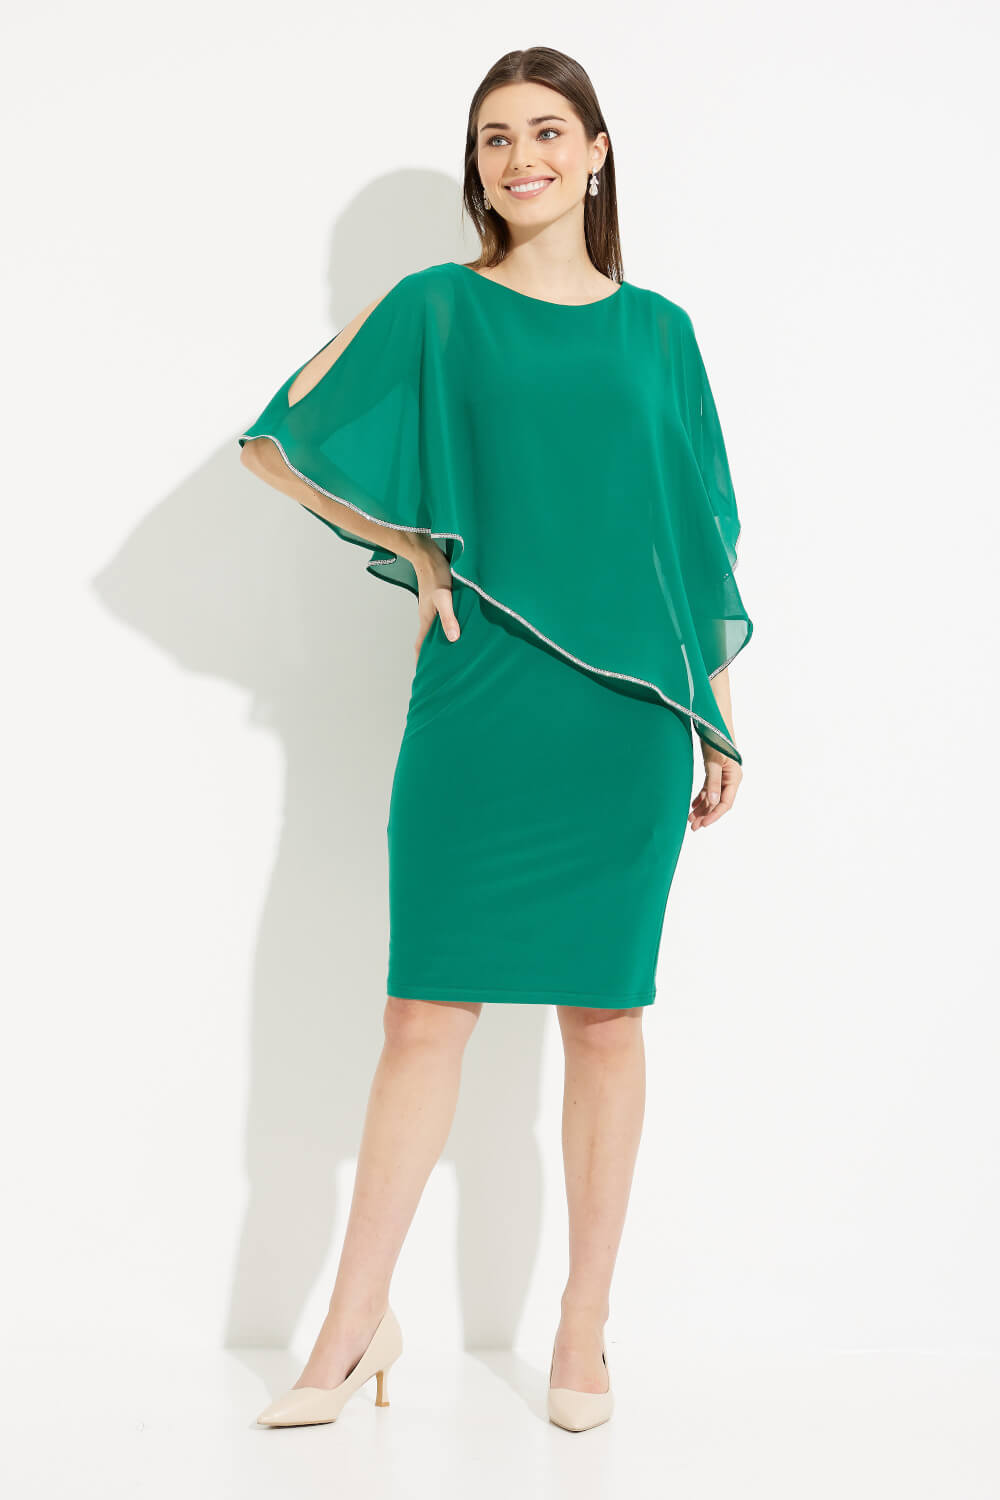 Jewel Trim Chiffon Overlay Dress Style 223762TT. True Emerald